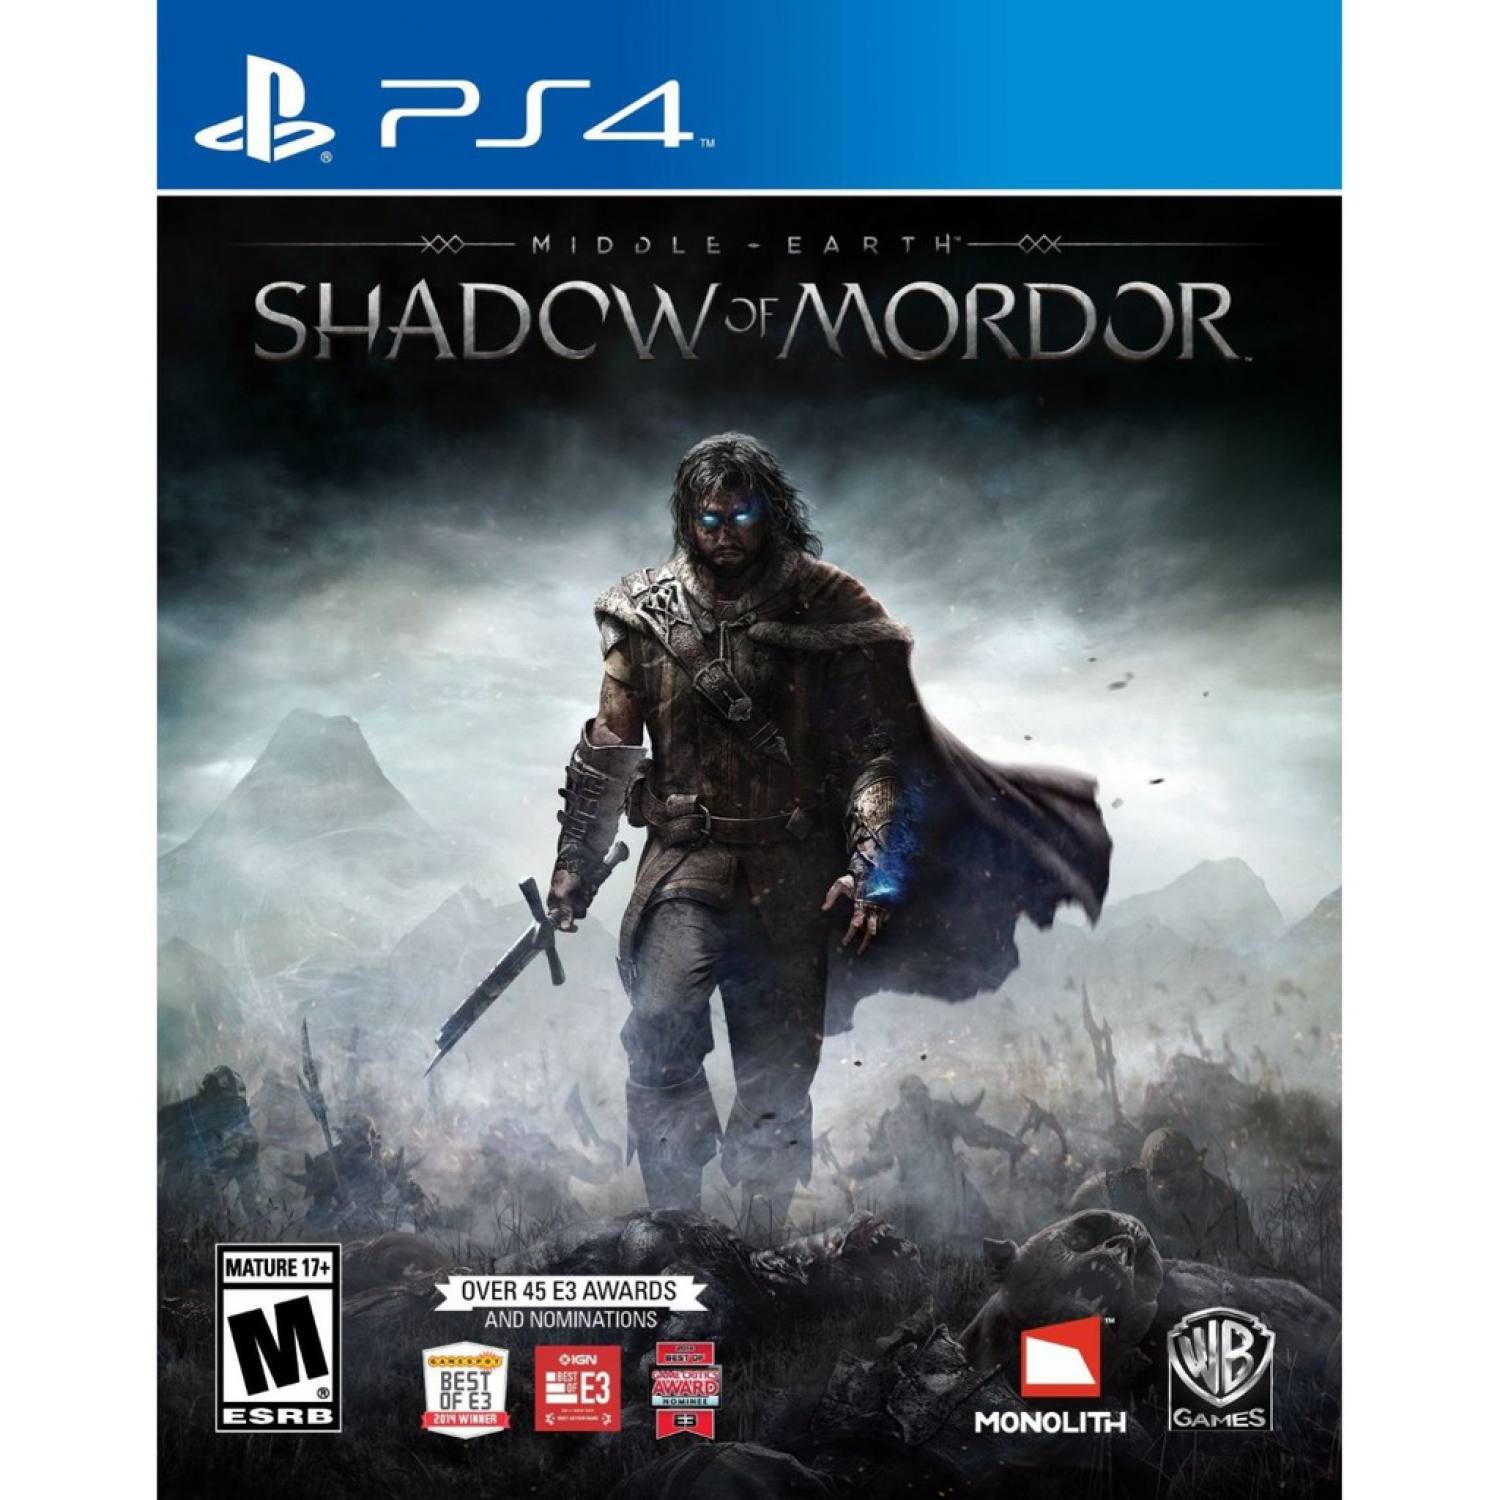 Đĩa game Shadow of Mordor cho PS4